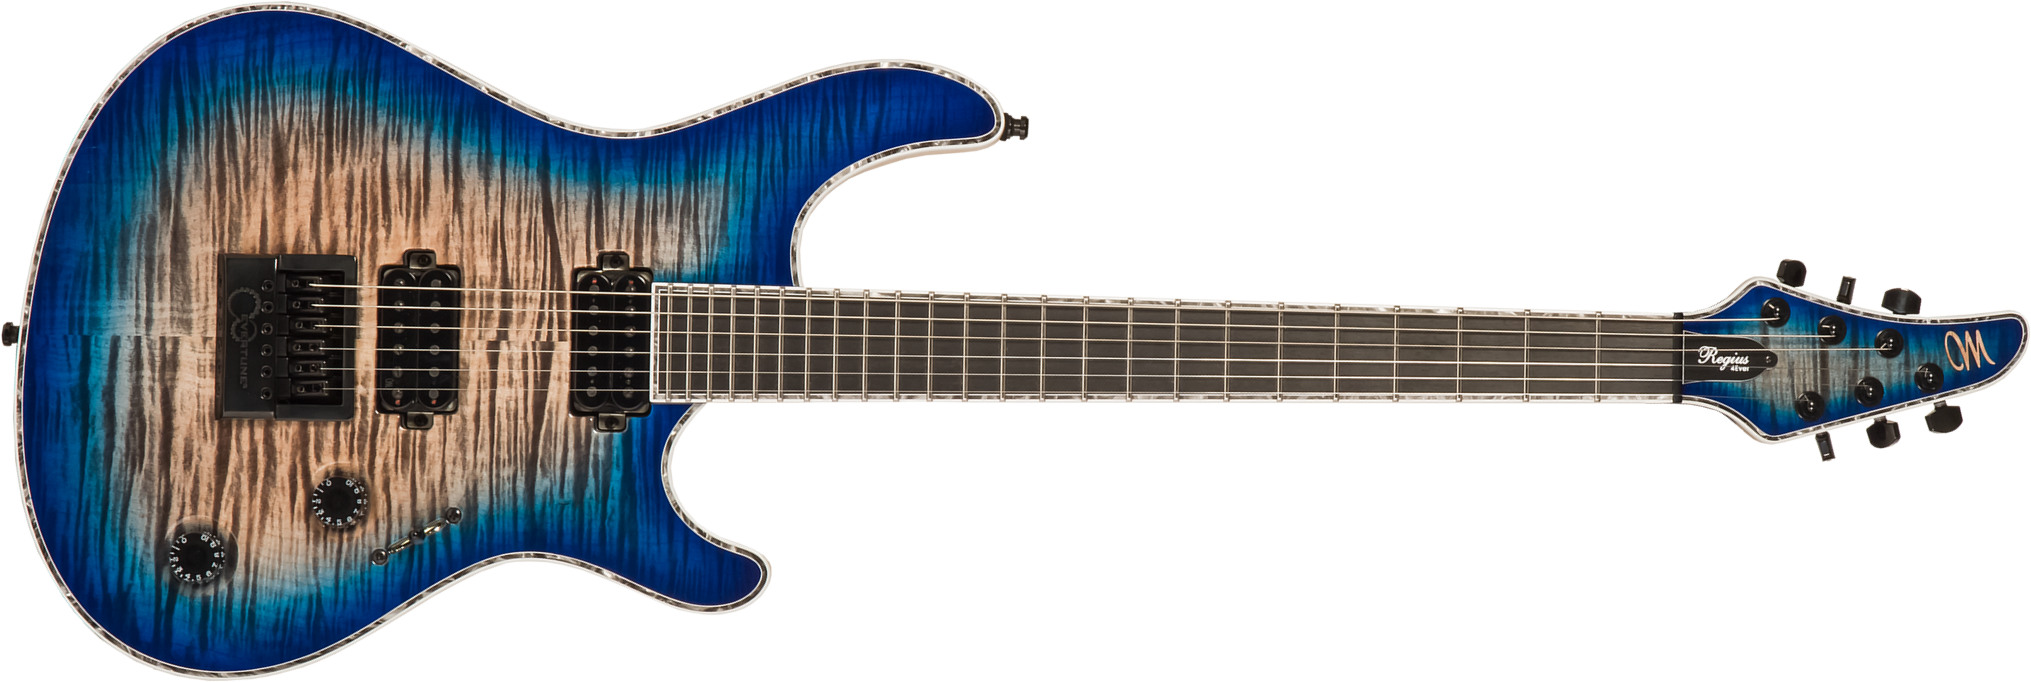 Mayones Guitars Regius 4ever 6 2h Ht Eb #rp2309275 - Jeans Black 3-tone Blue Burst Gloss - Guitarra electrica metalica - Main picture